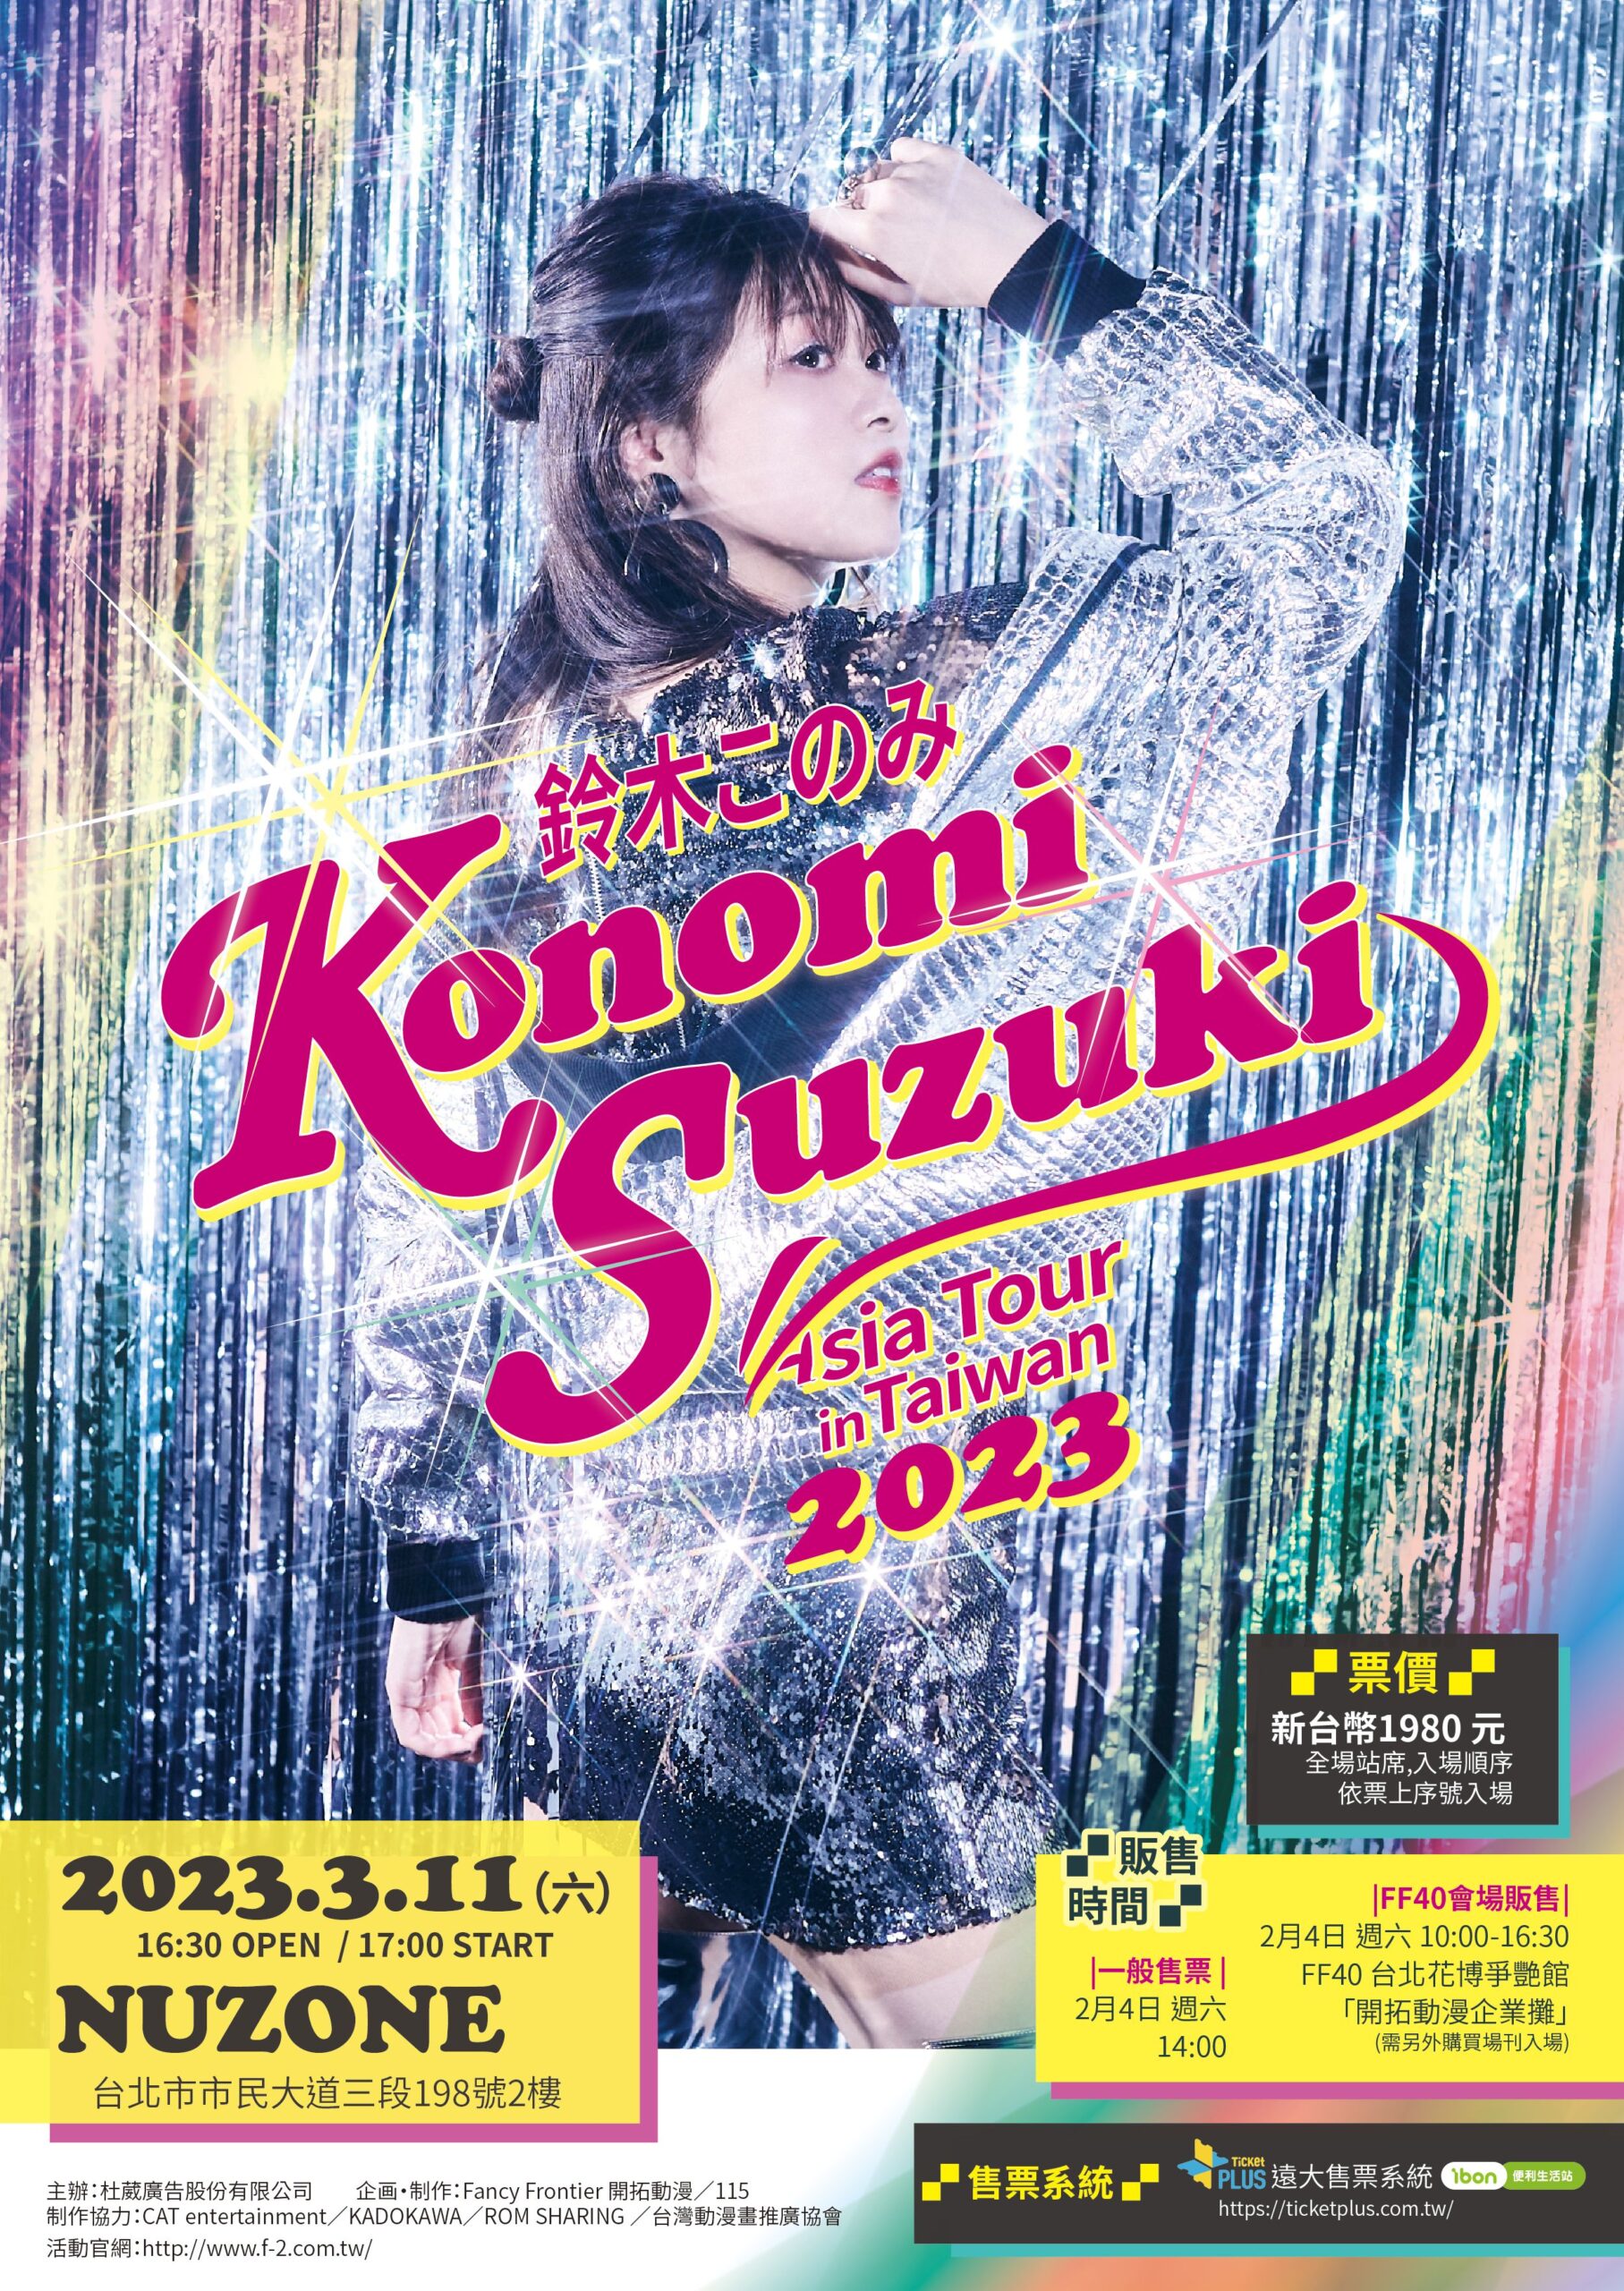 [2023/03/11] Konomi Suzuki Asia Tour 2023 in Taiwan